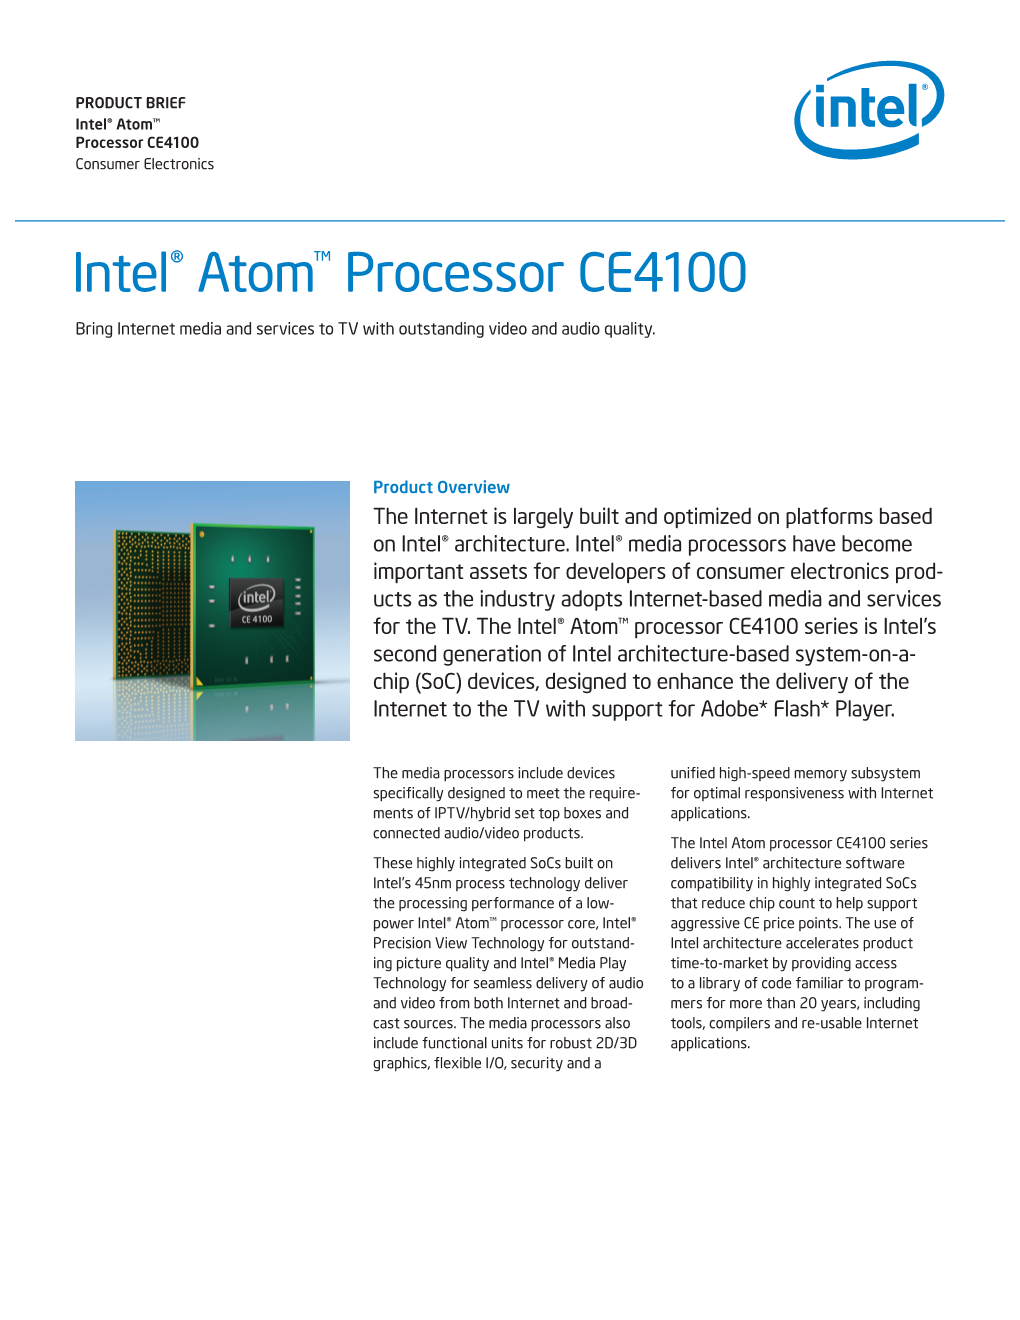 Intel® Atom™ Processor CE4100 Consumer Electronics